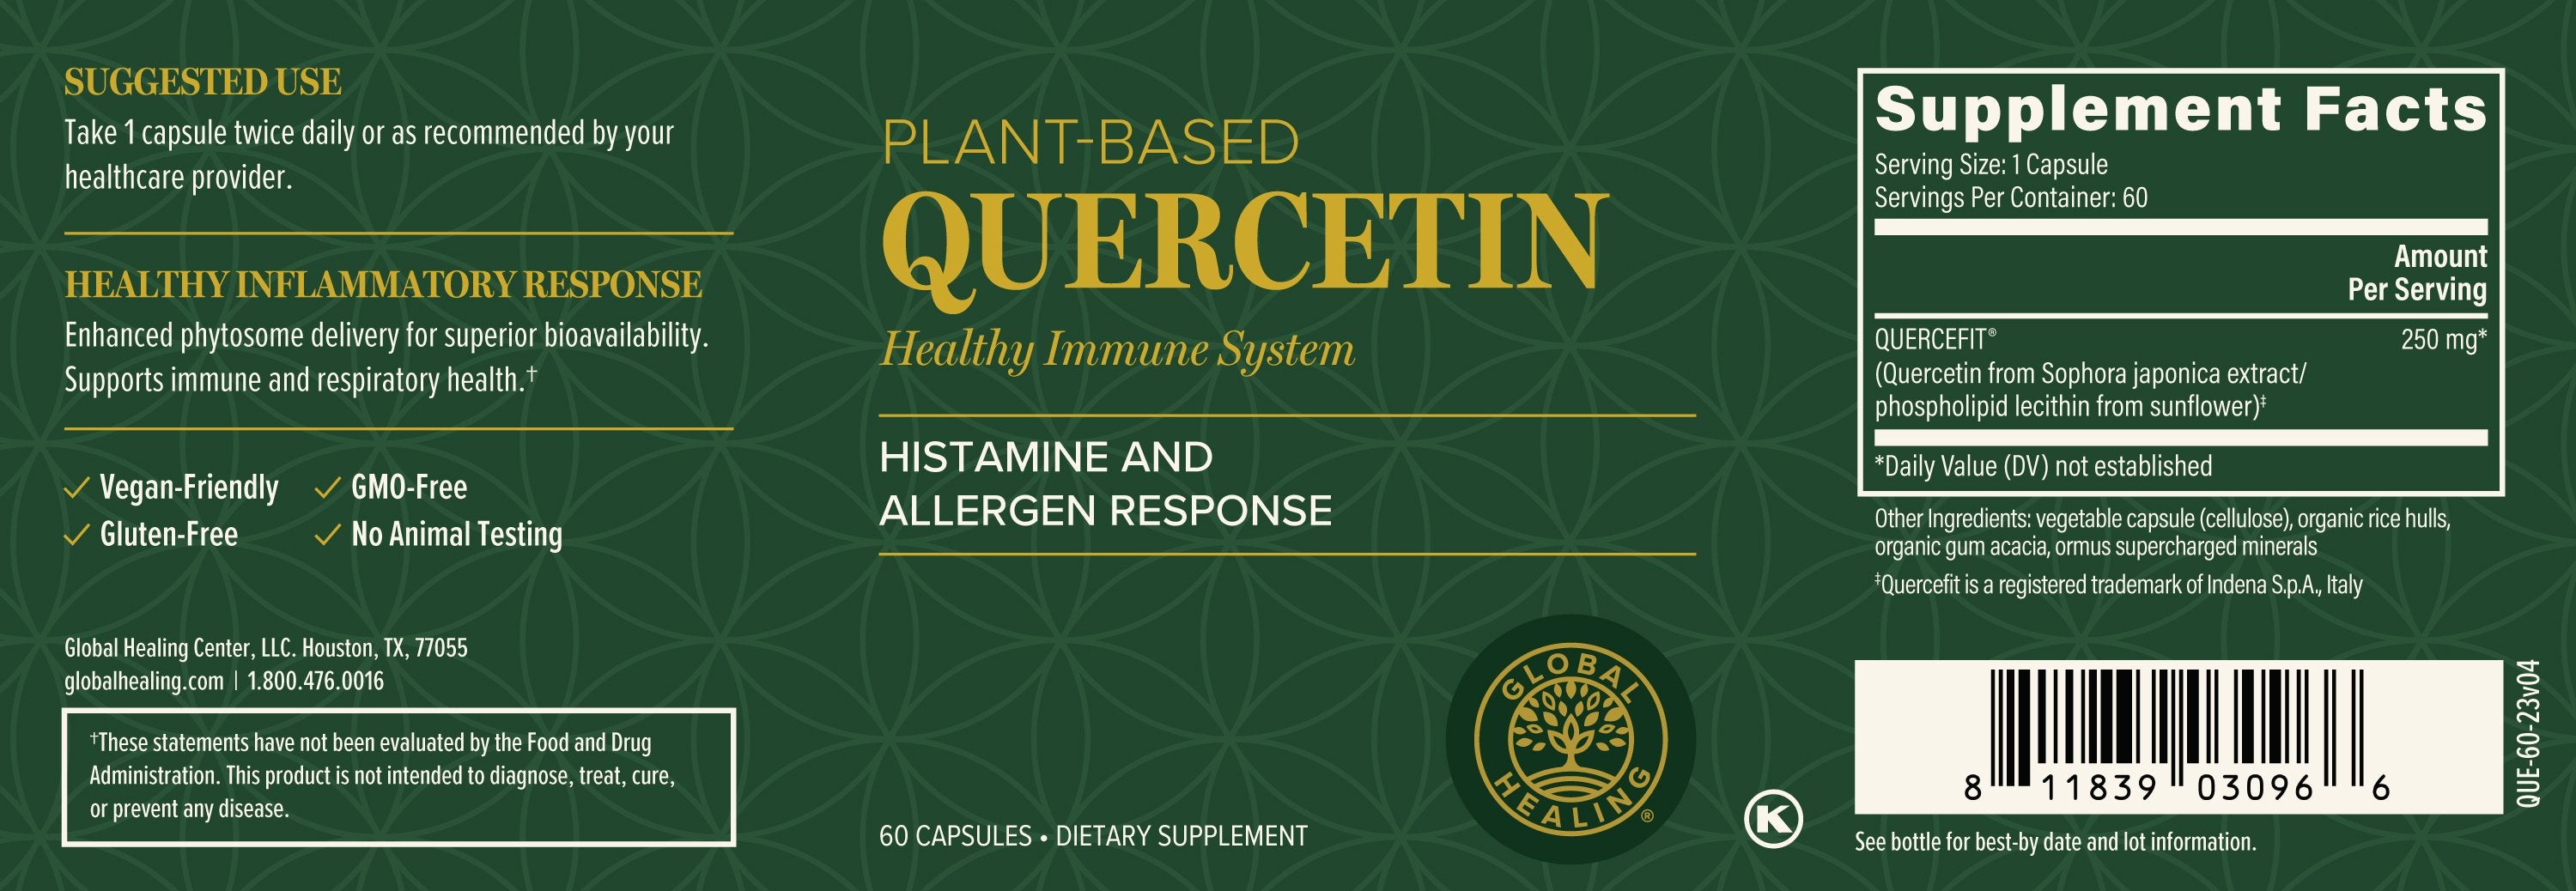 Global Healing Plant Based Quercetin Bottle Label 60 Capsules